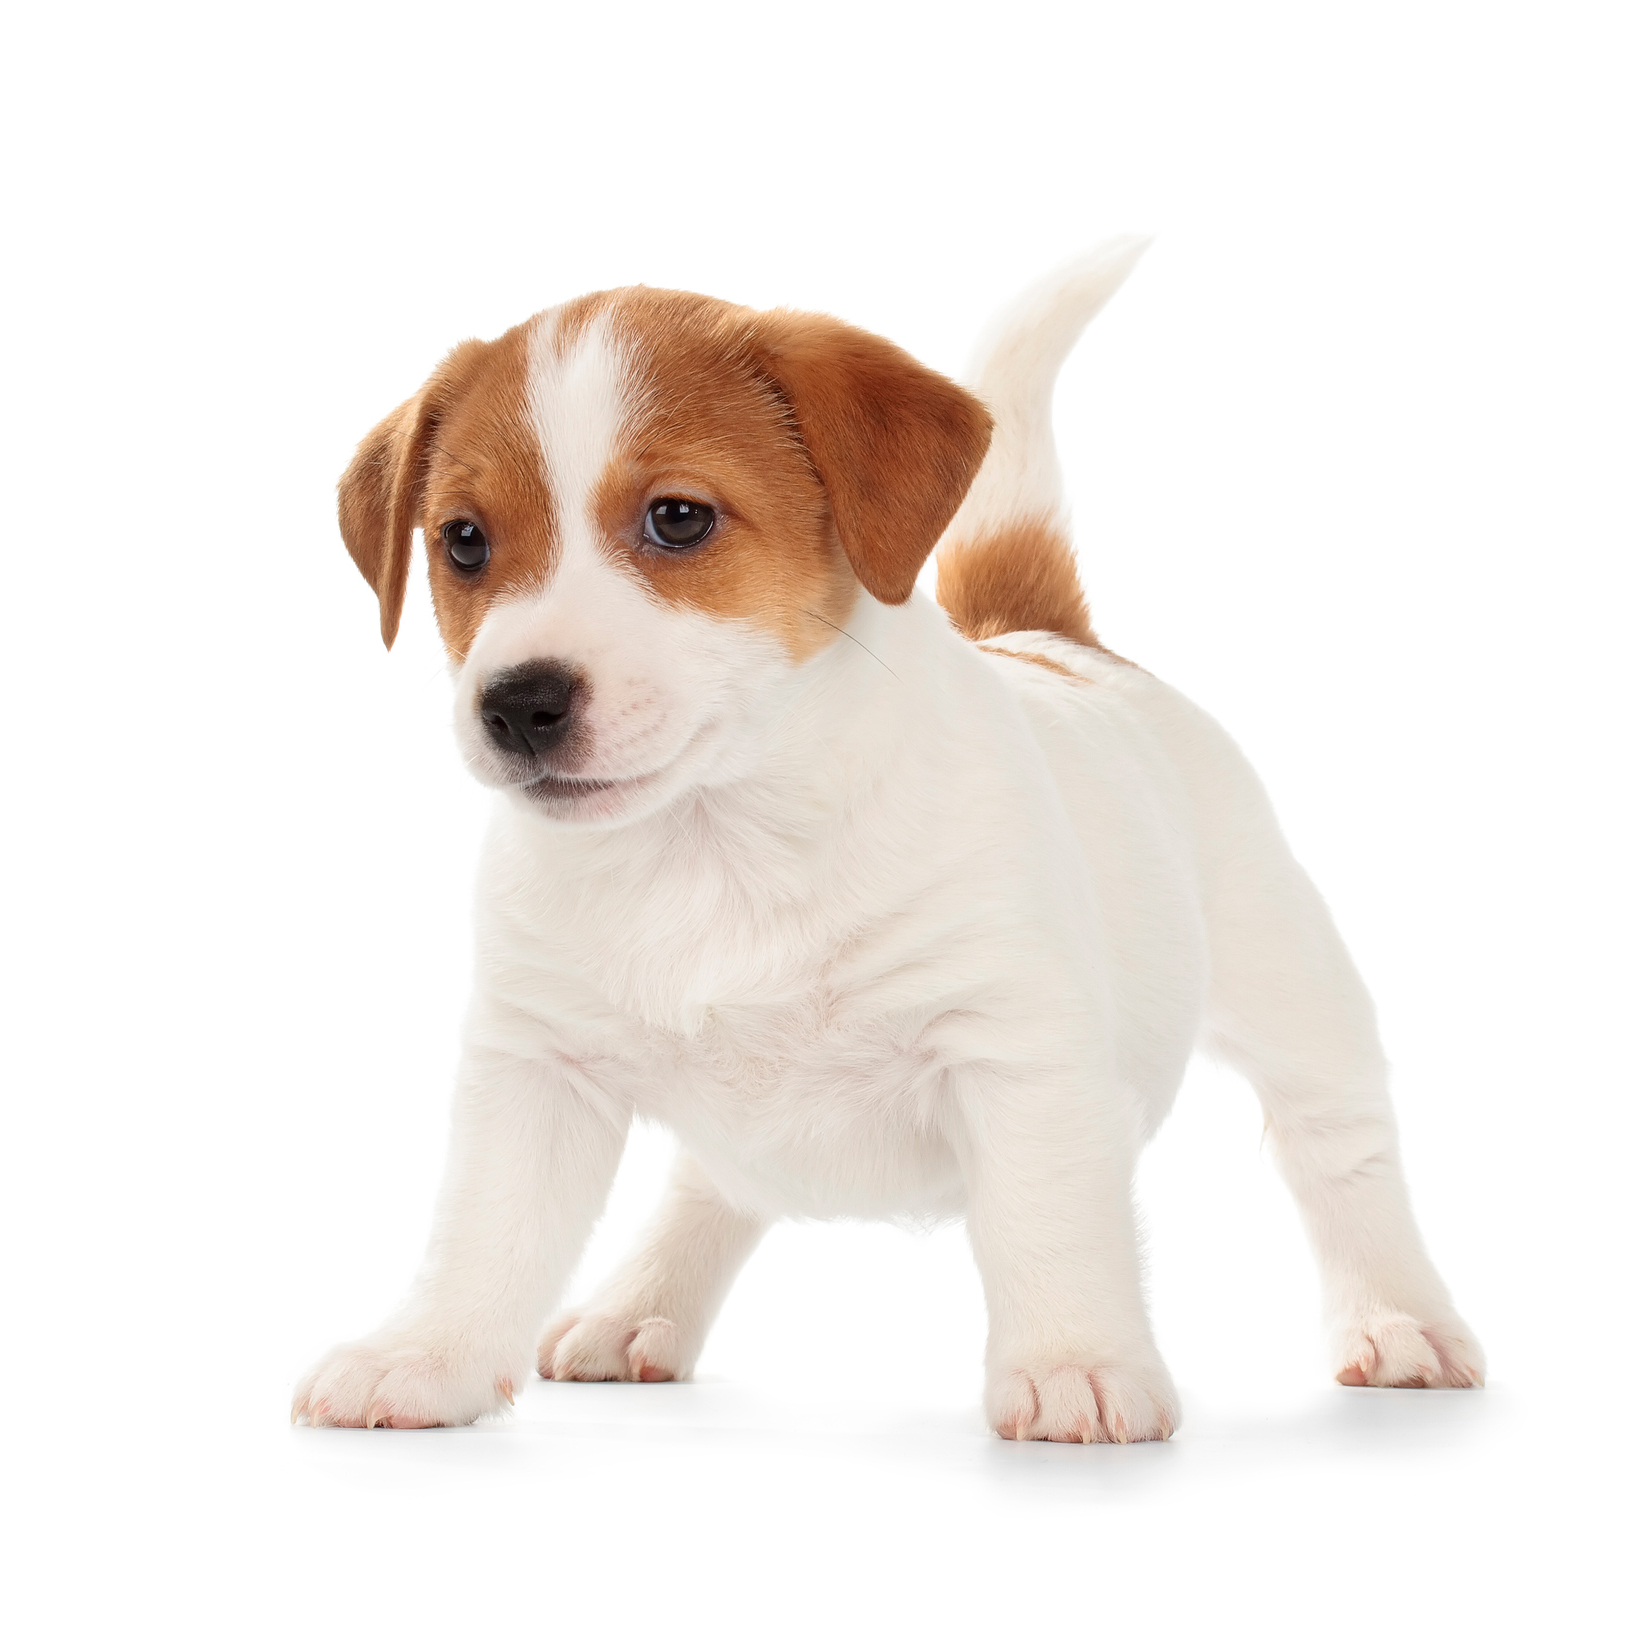 Jack Russell | Houssin | Puppy's te koop, pup koop, hondenkweker, hondenkwekerij, rashonden